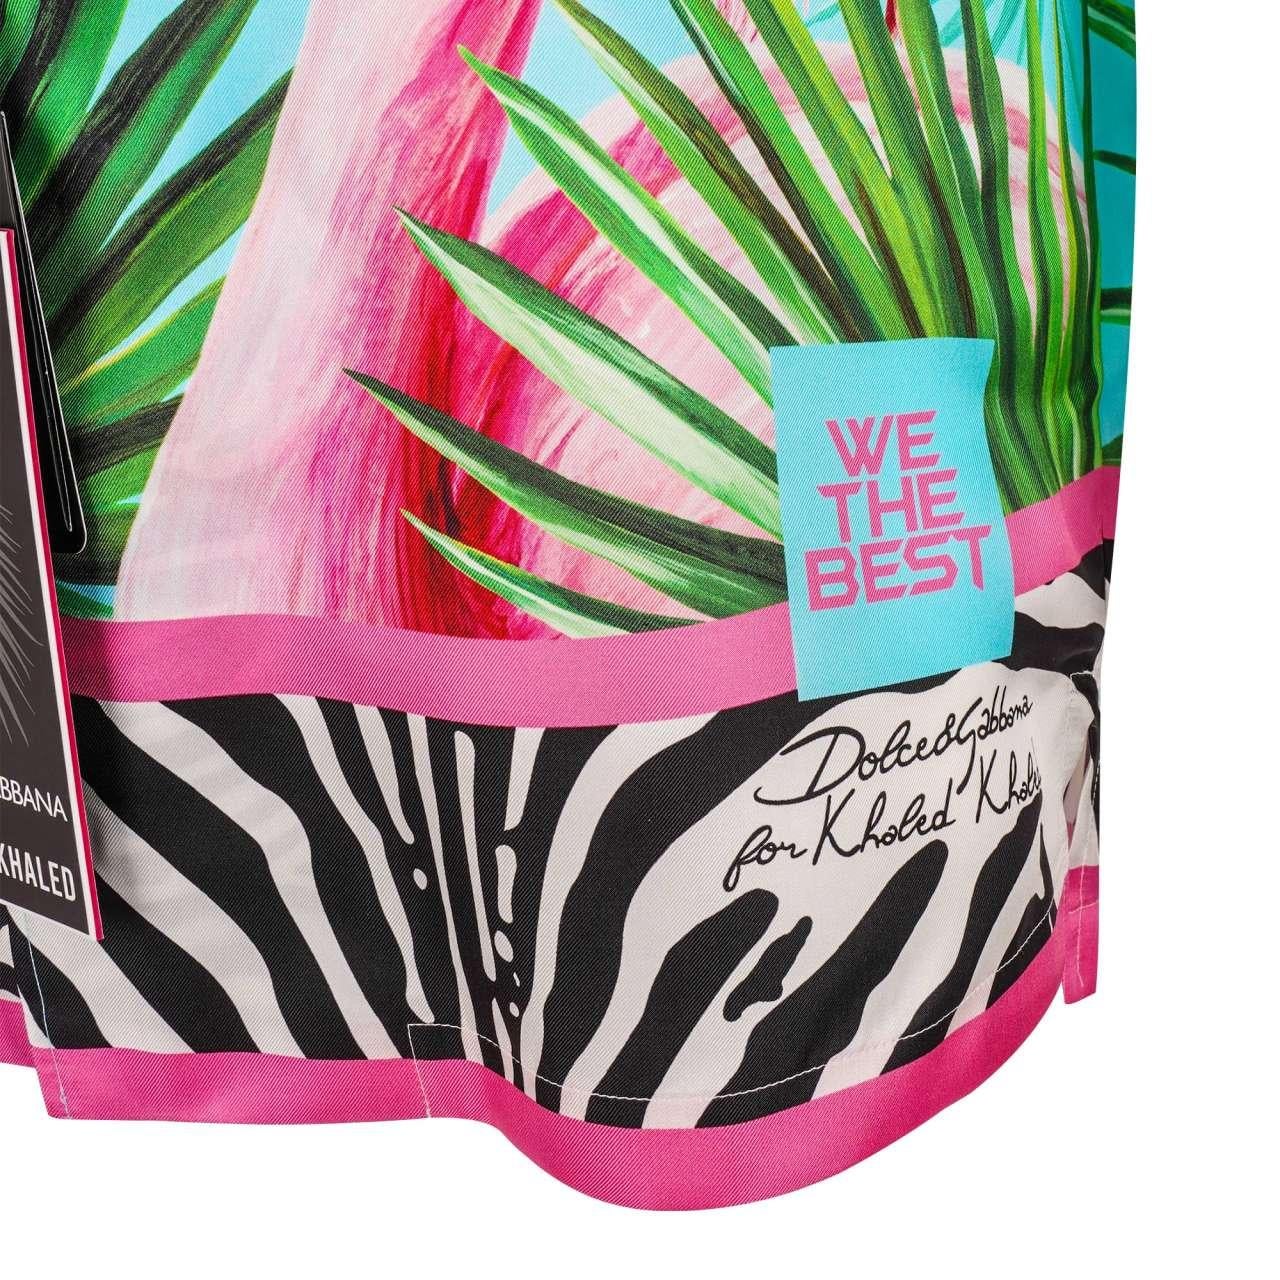 Men's Dolce & Gabbana - DJ Khaled Silk Flamingo Zebra Shirt with Sunglasses and CD 38 For Sale